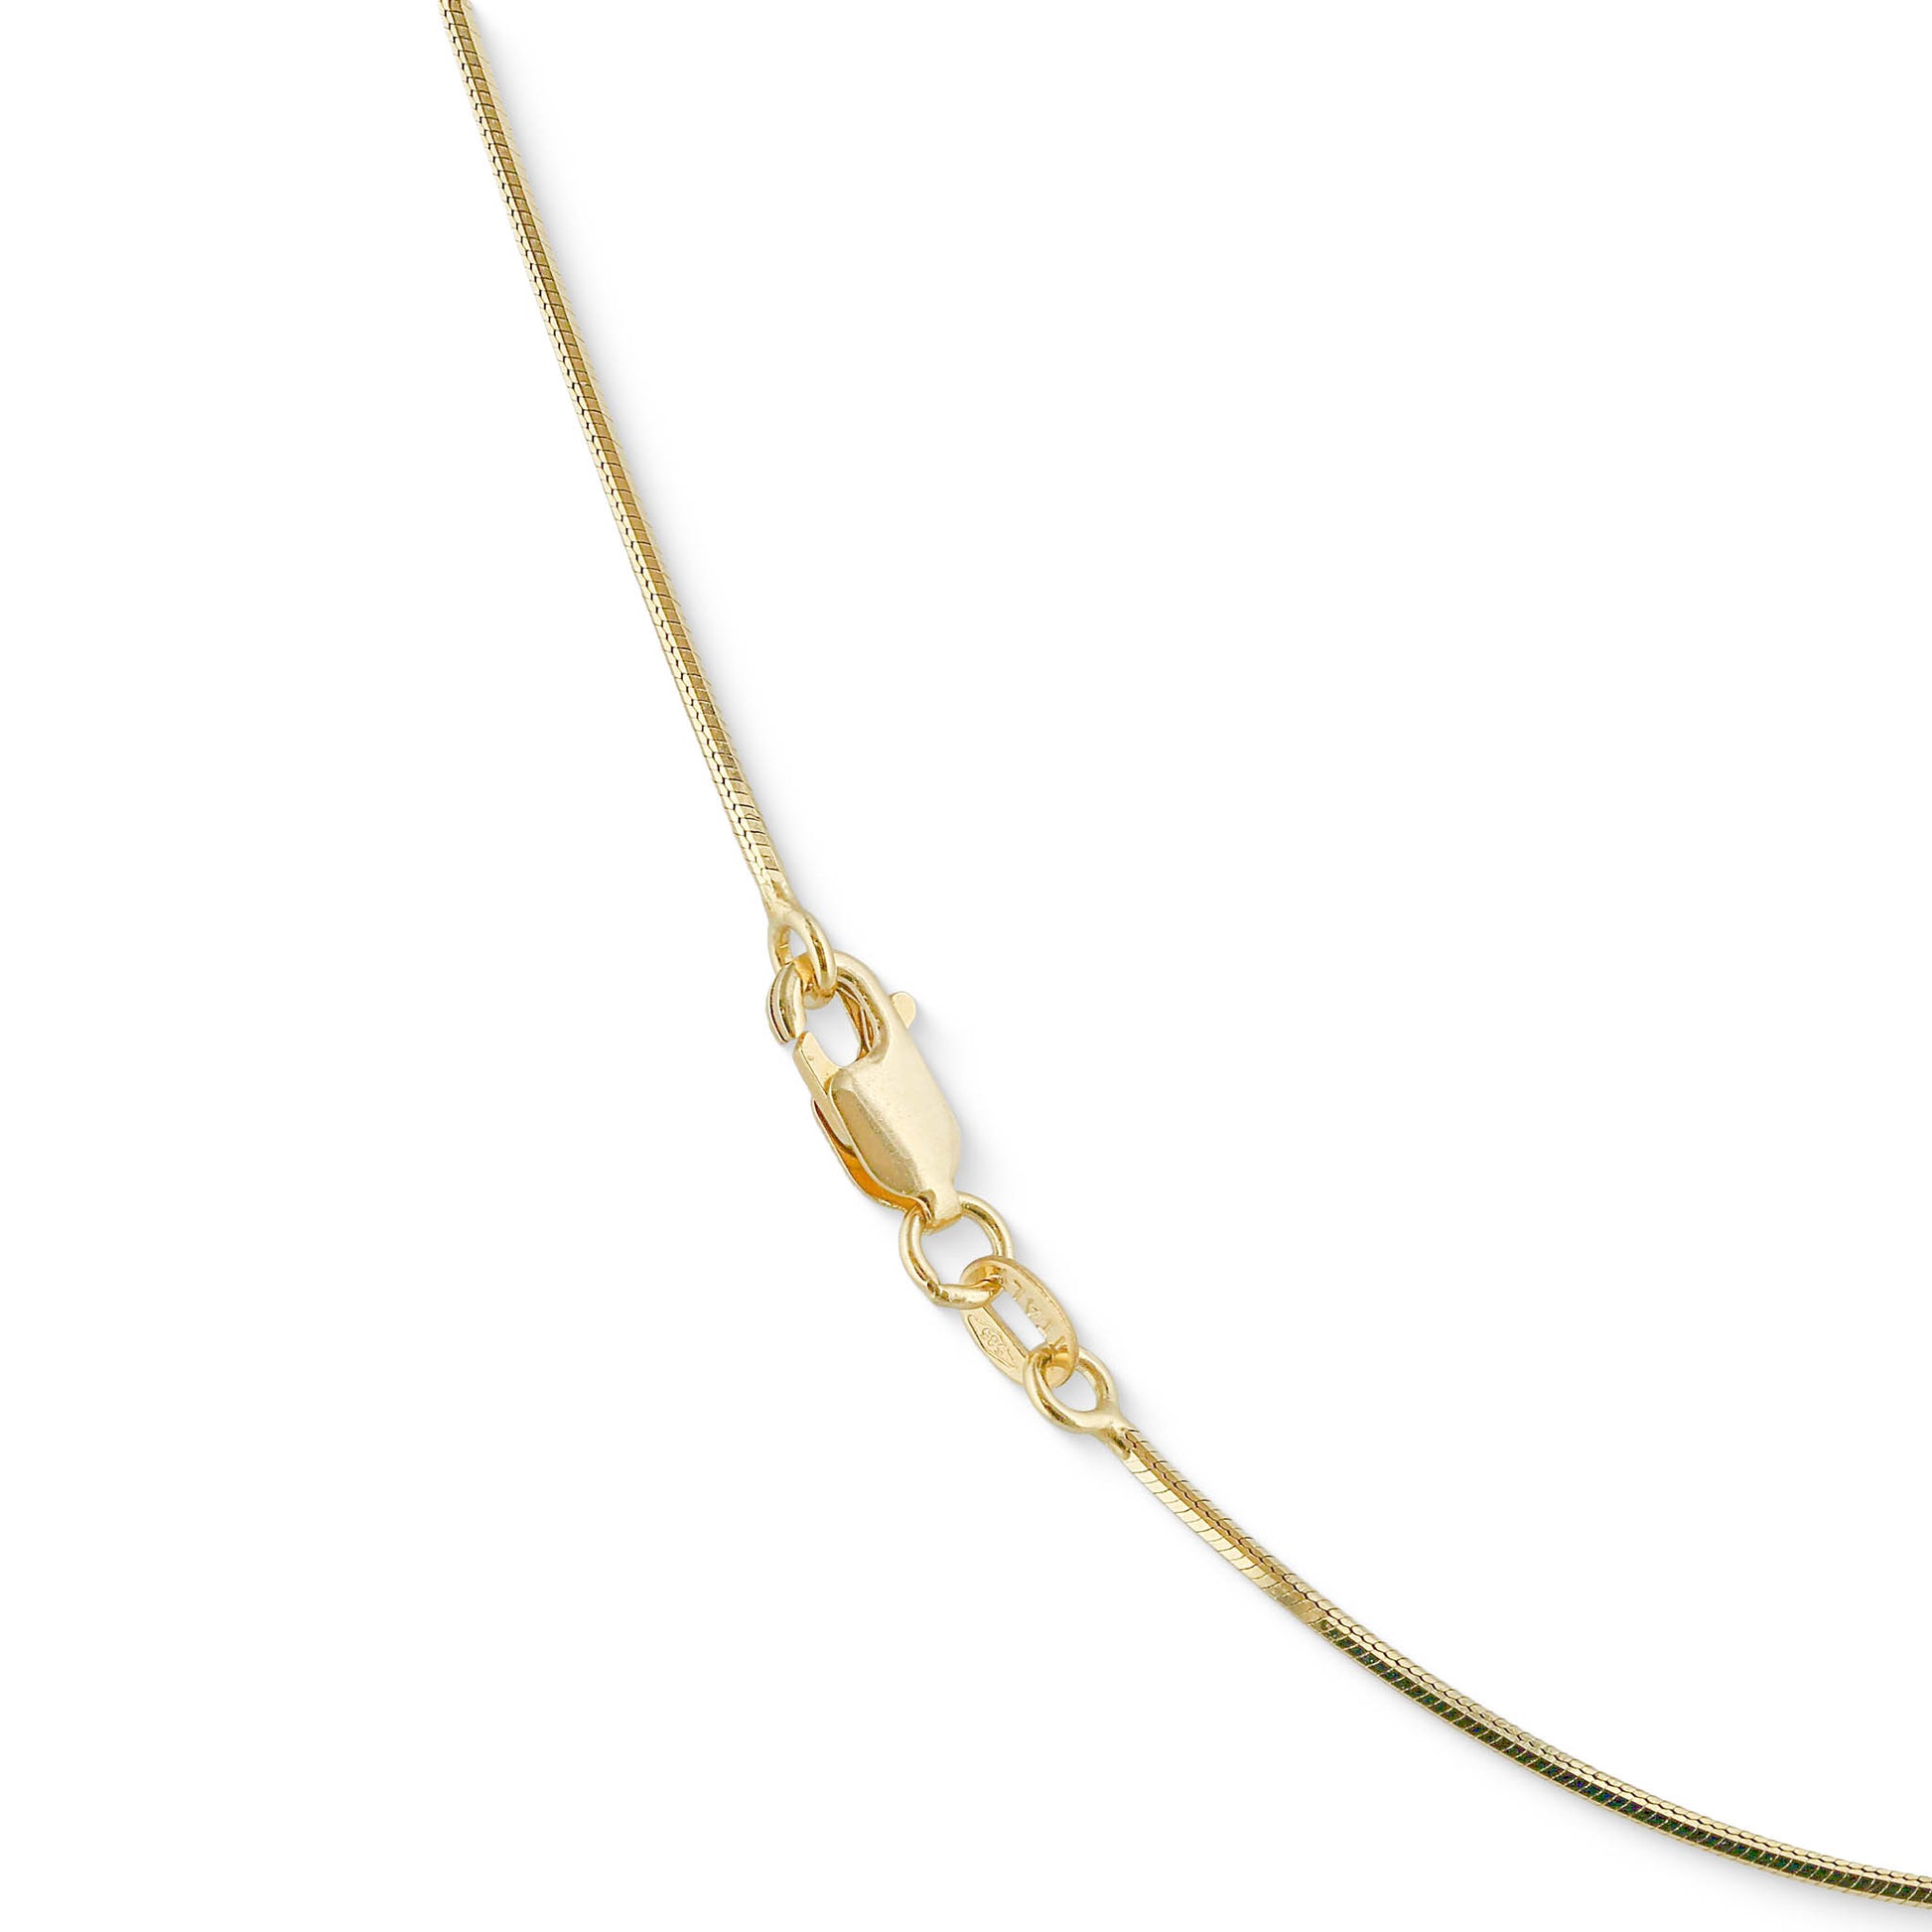 760222 - 14K Yellow Gold - 16" Diamond Cut Snake Chain, 1.2mm